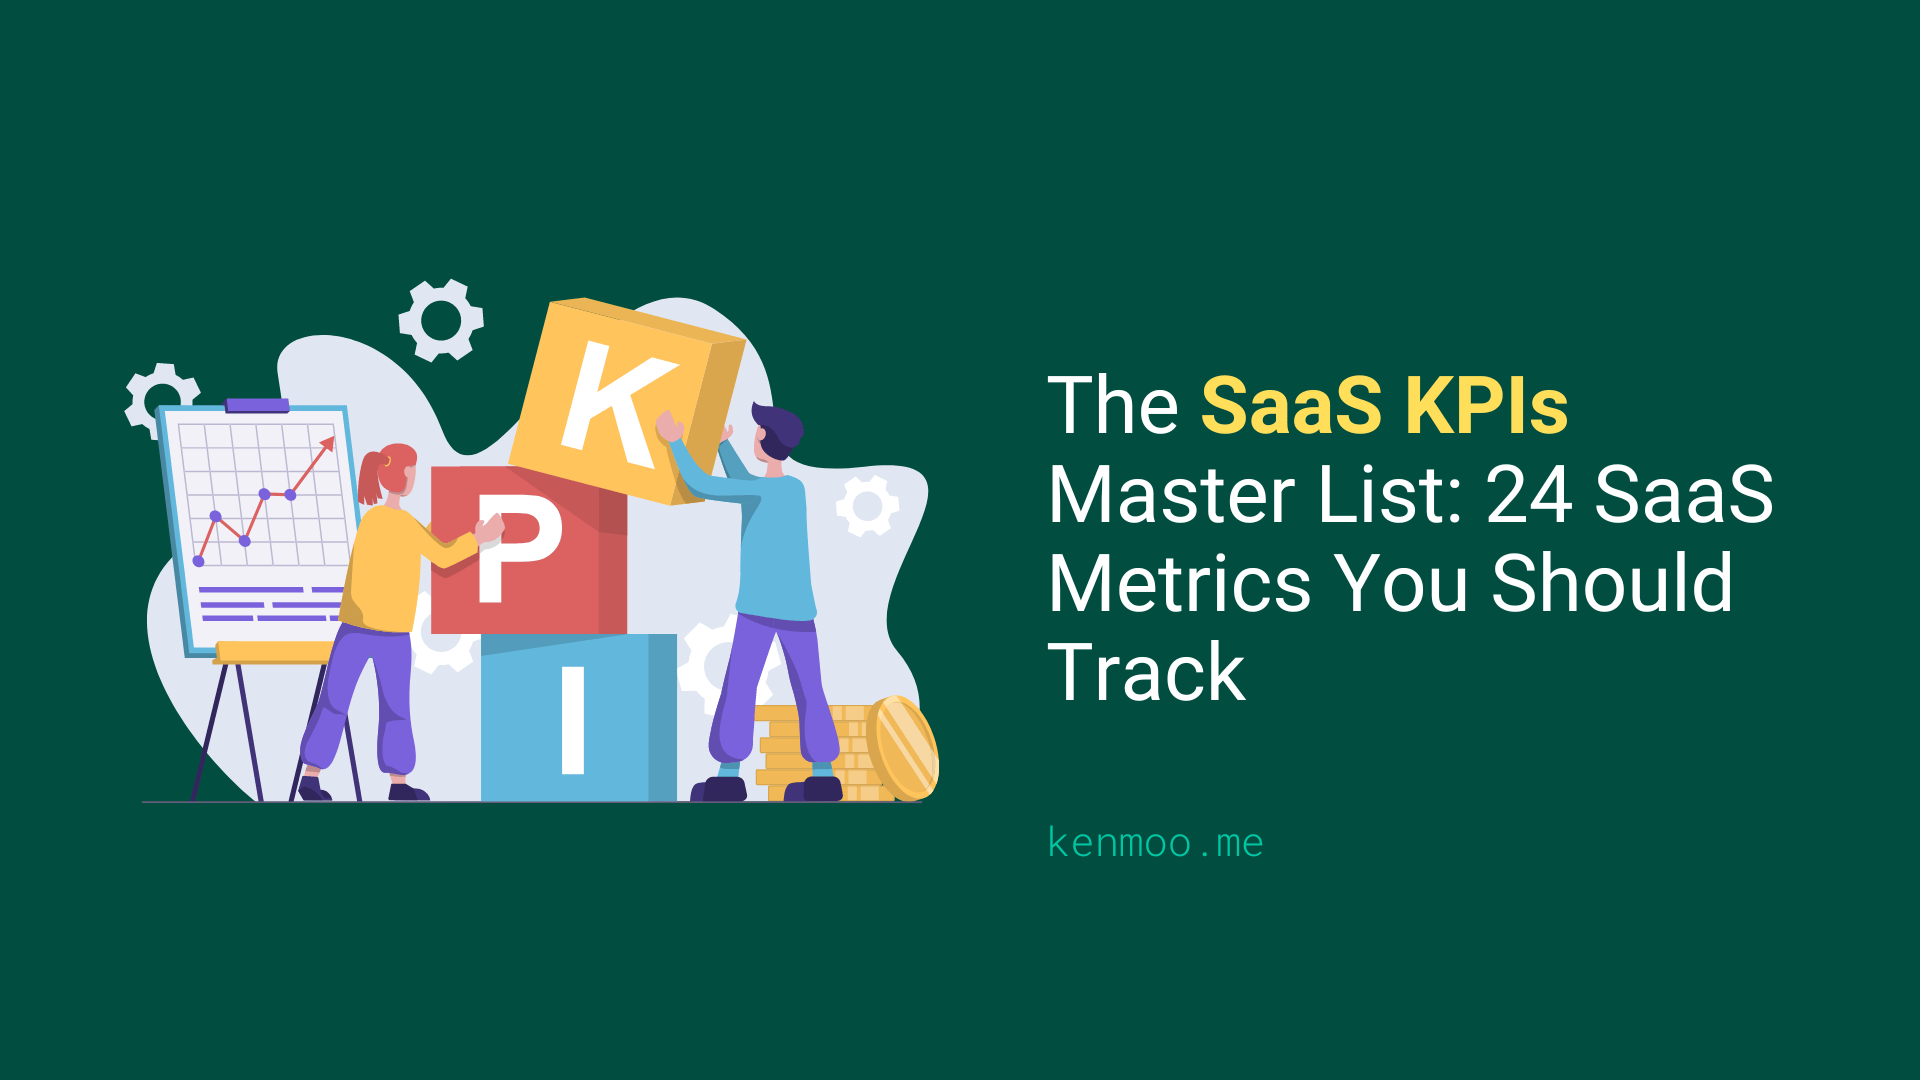 The SaaS KPIs Master List: 24 SaaS Metrics You Should Track